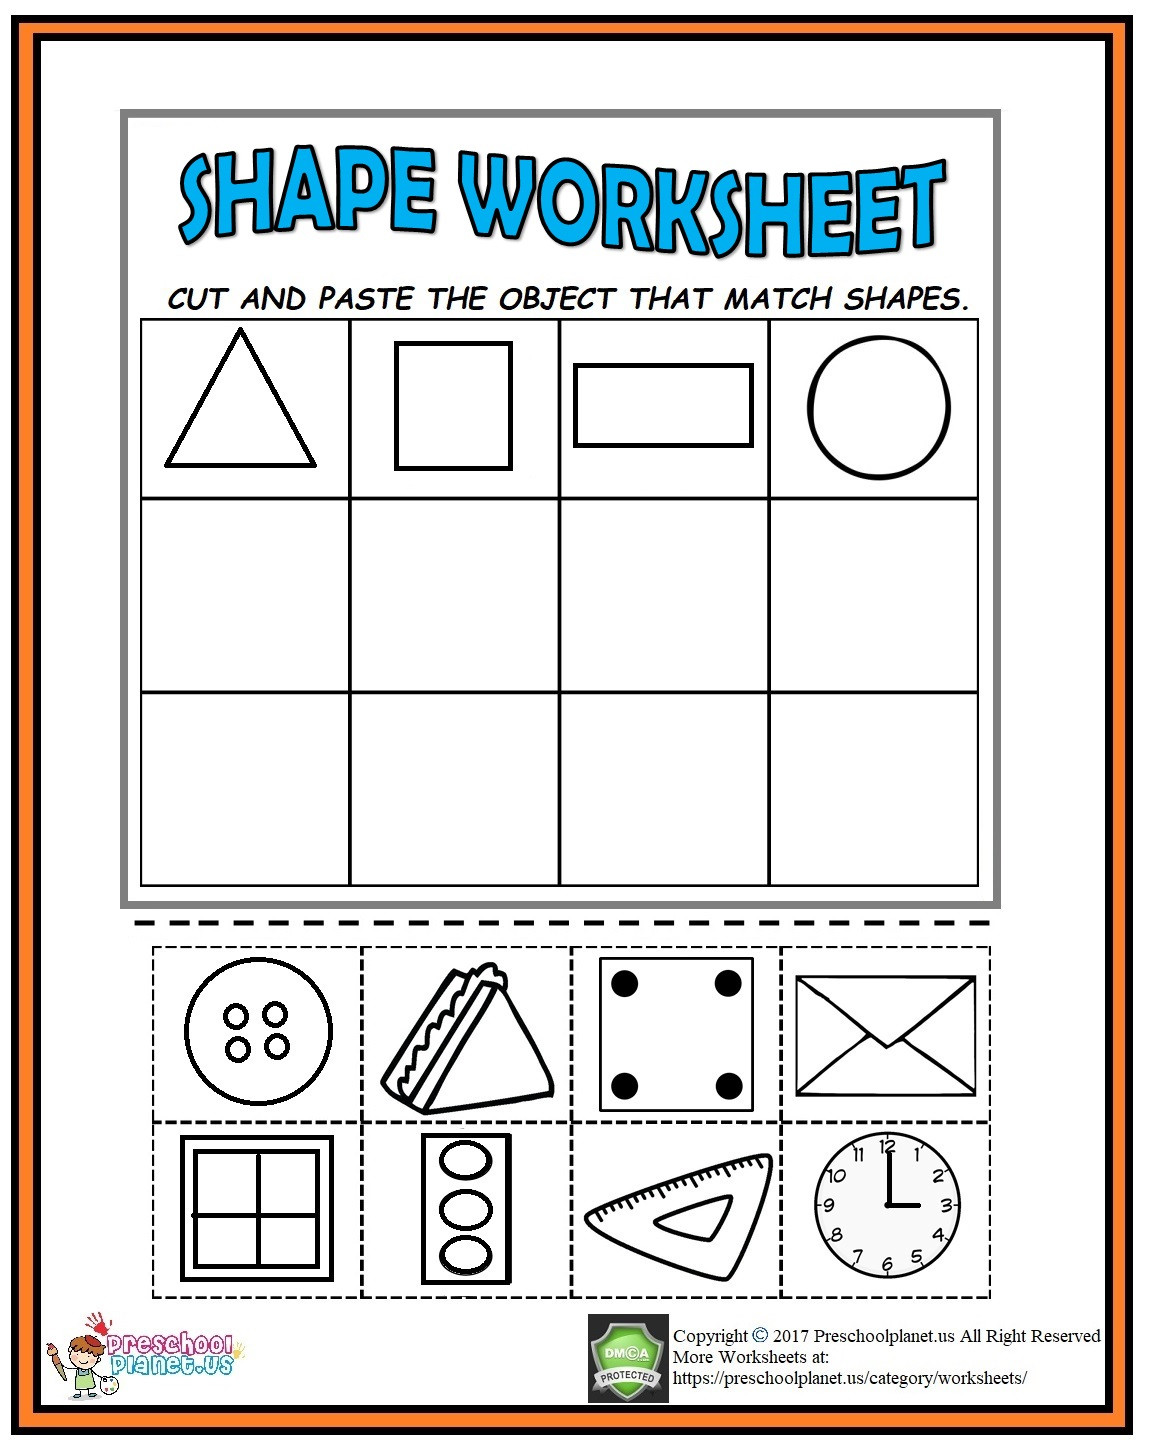 Kindergarten Cut and Paste Worksheets Cut and Paste Shape Worksheet – Preschoolplanet